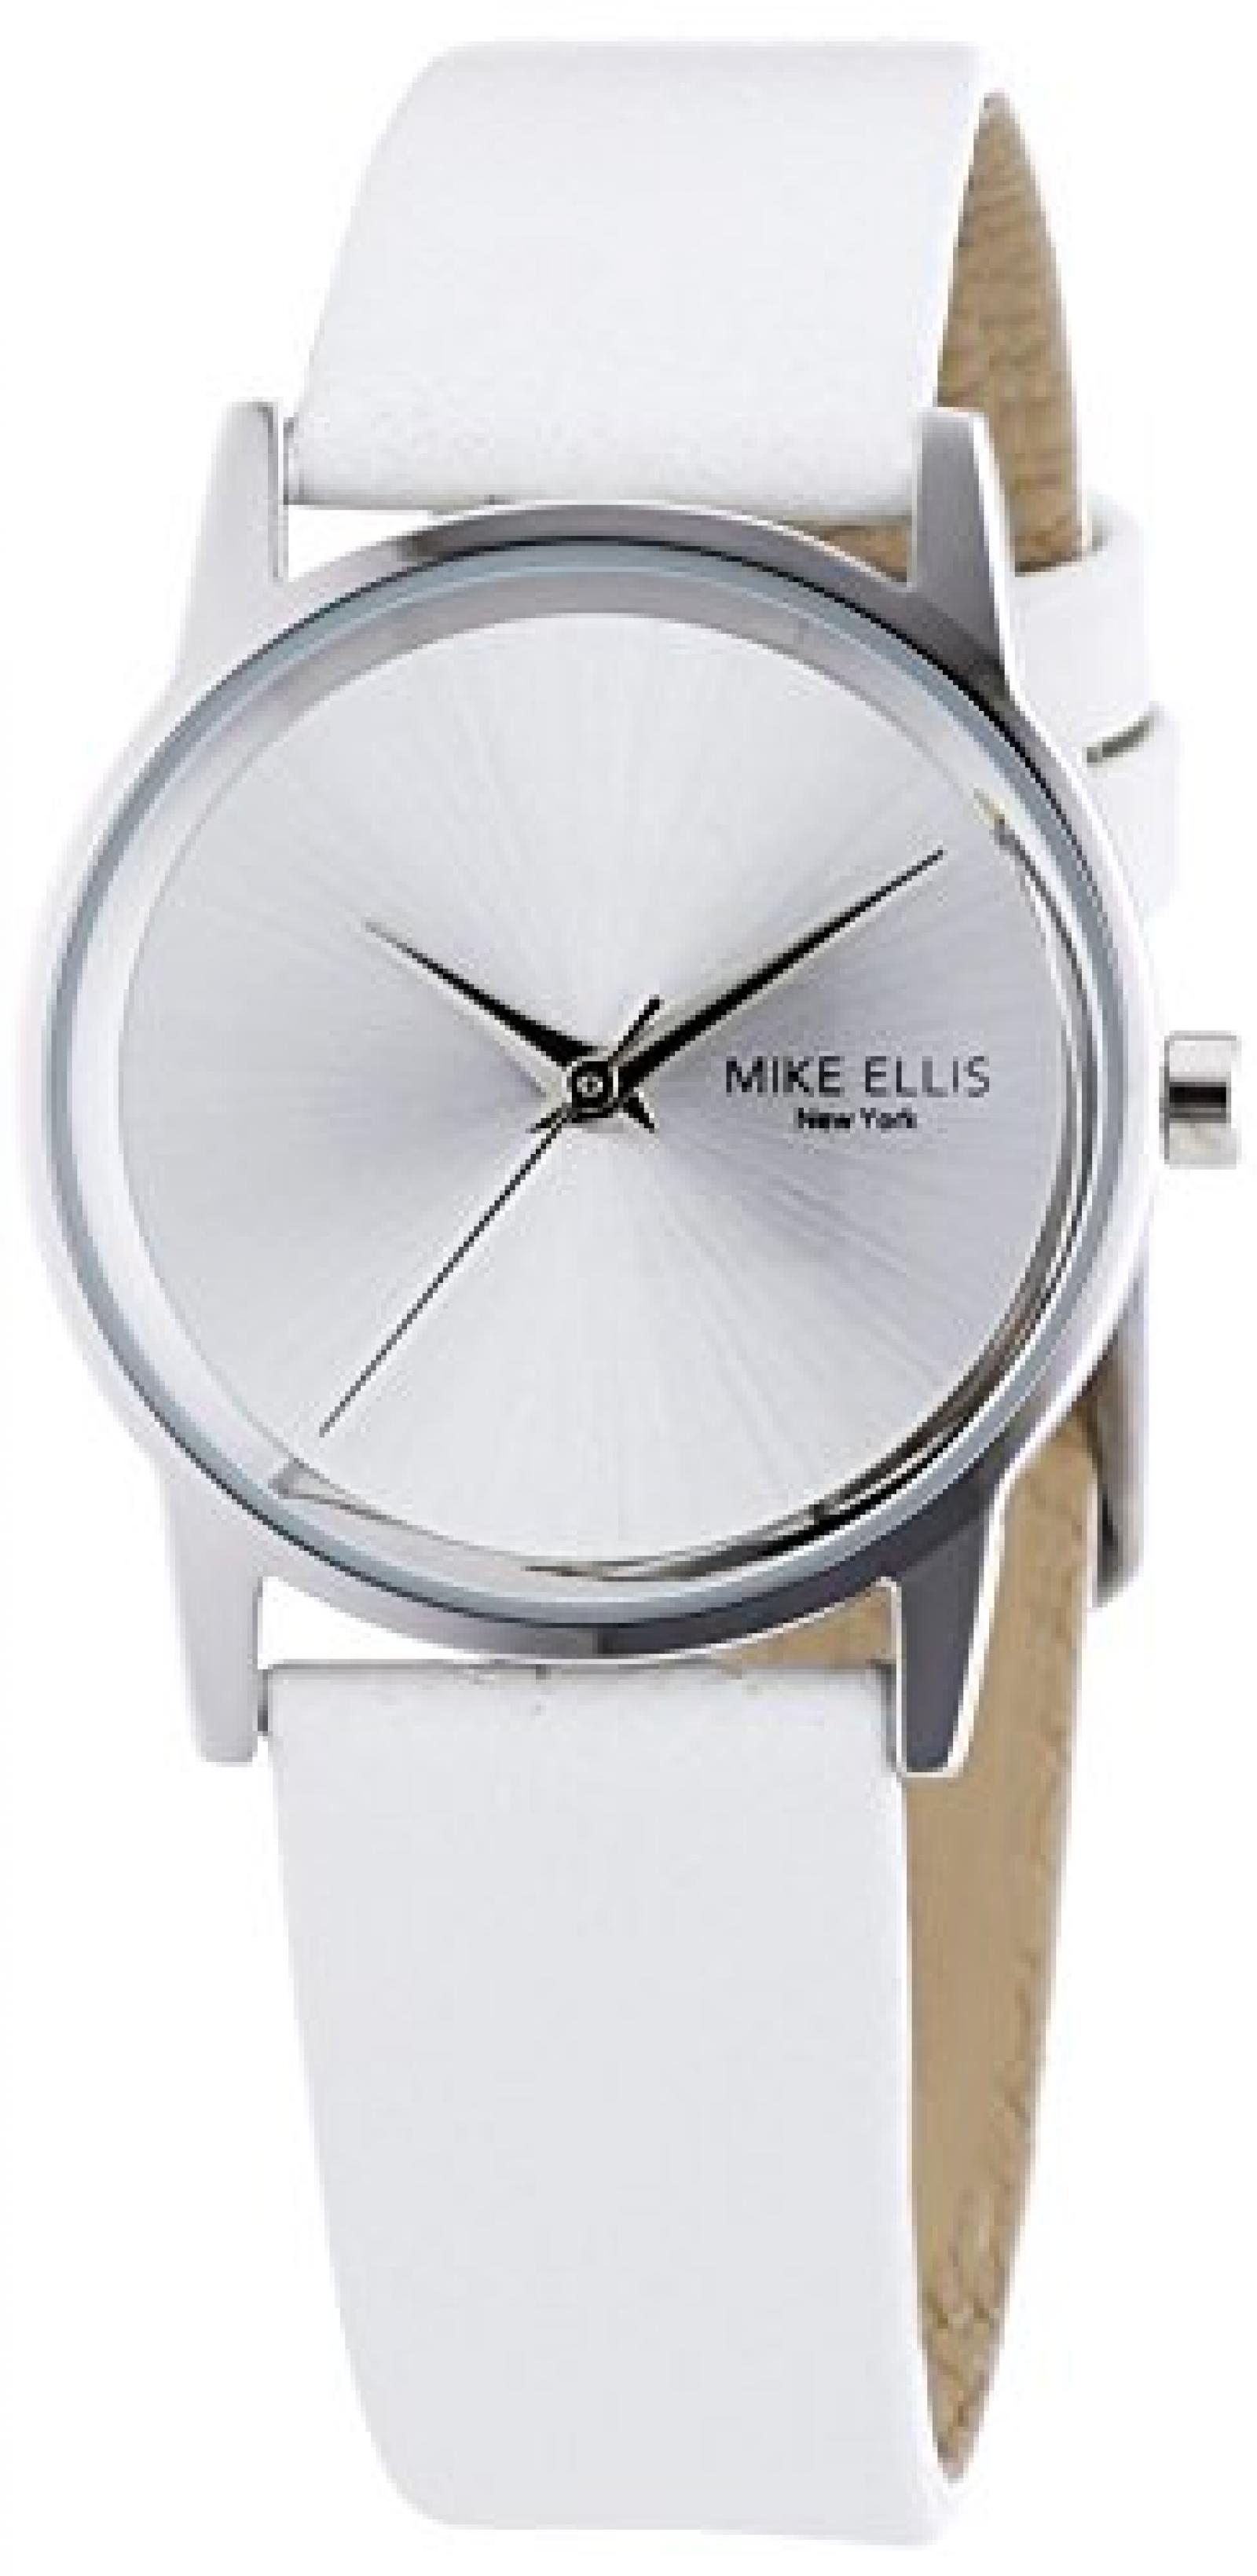 Mike Ellis New York Damen-Armbanduhr XS AW Analog Quarz Leder SL4-60230C 